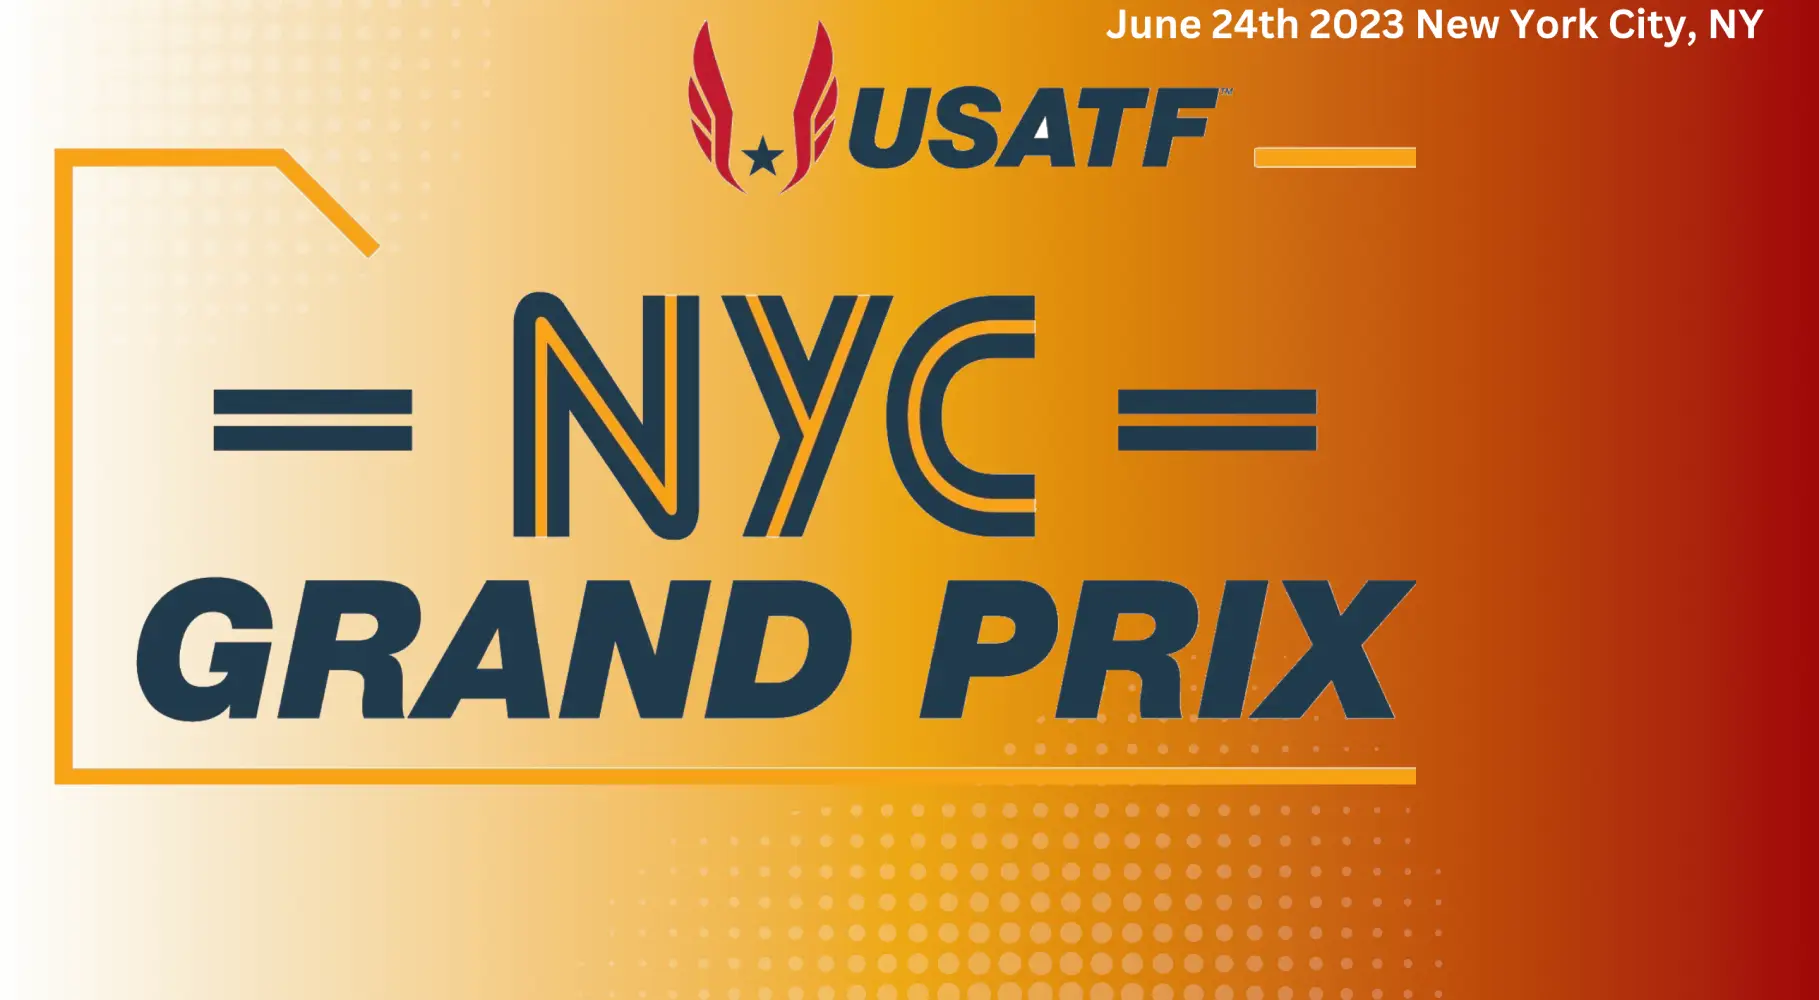 The 2023 USATF NYC Grand Prix schedule